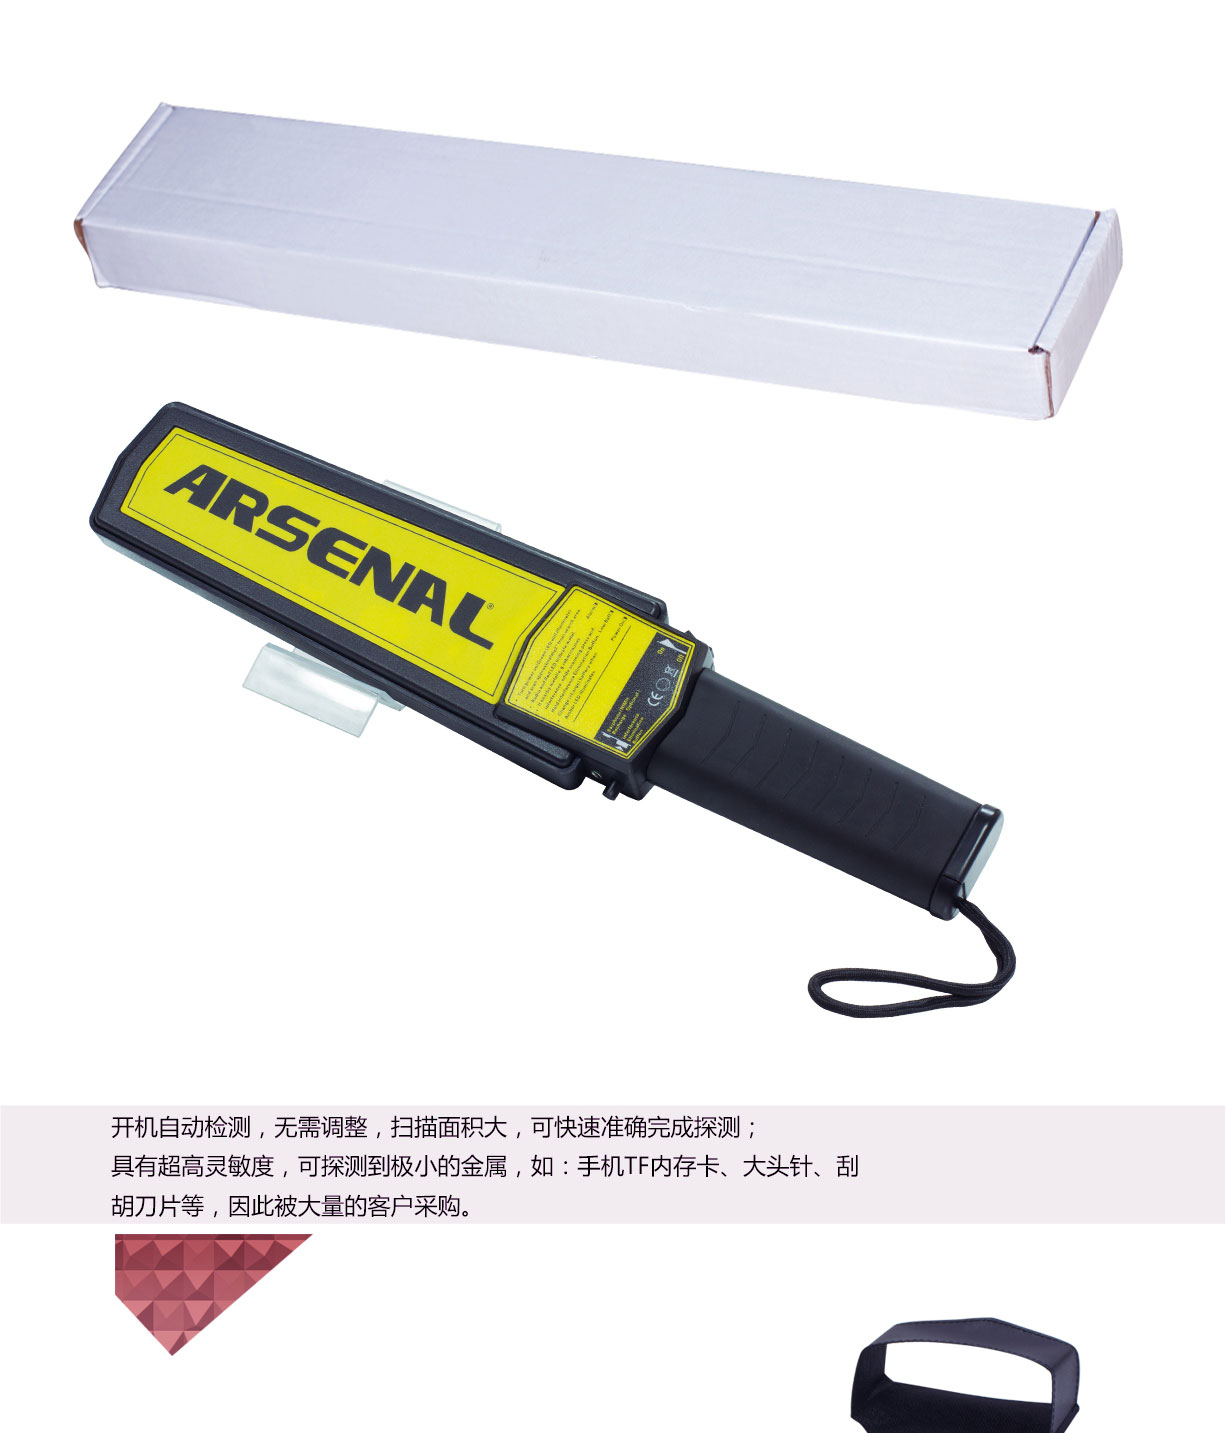 ARSENAL-1165180黄金首饰加工业安检手持金属探测器